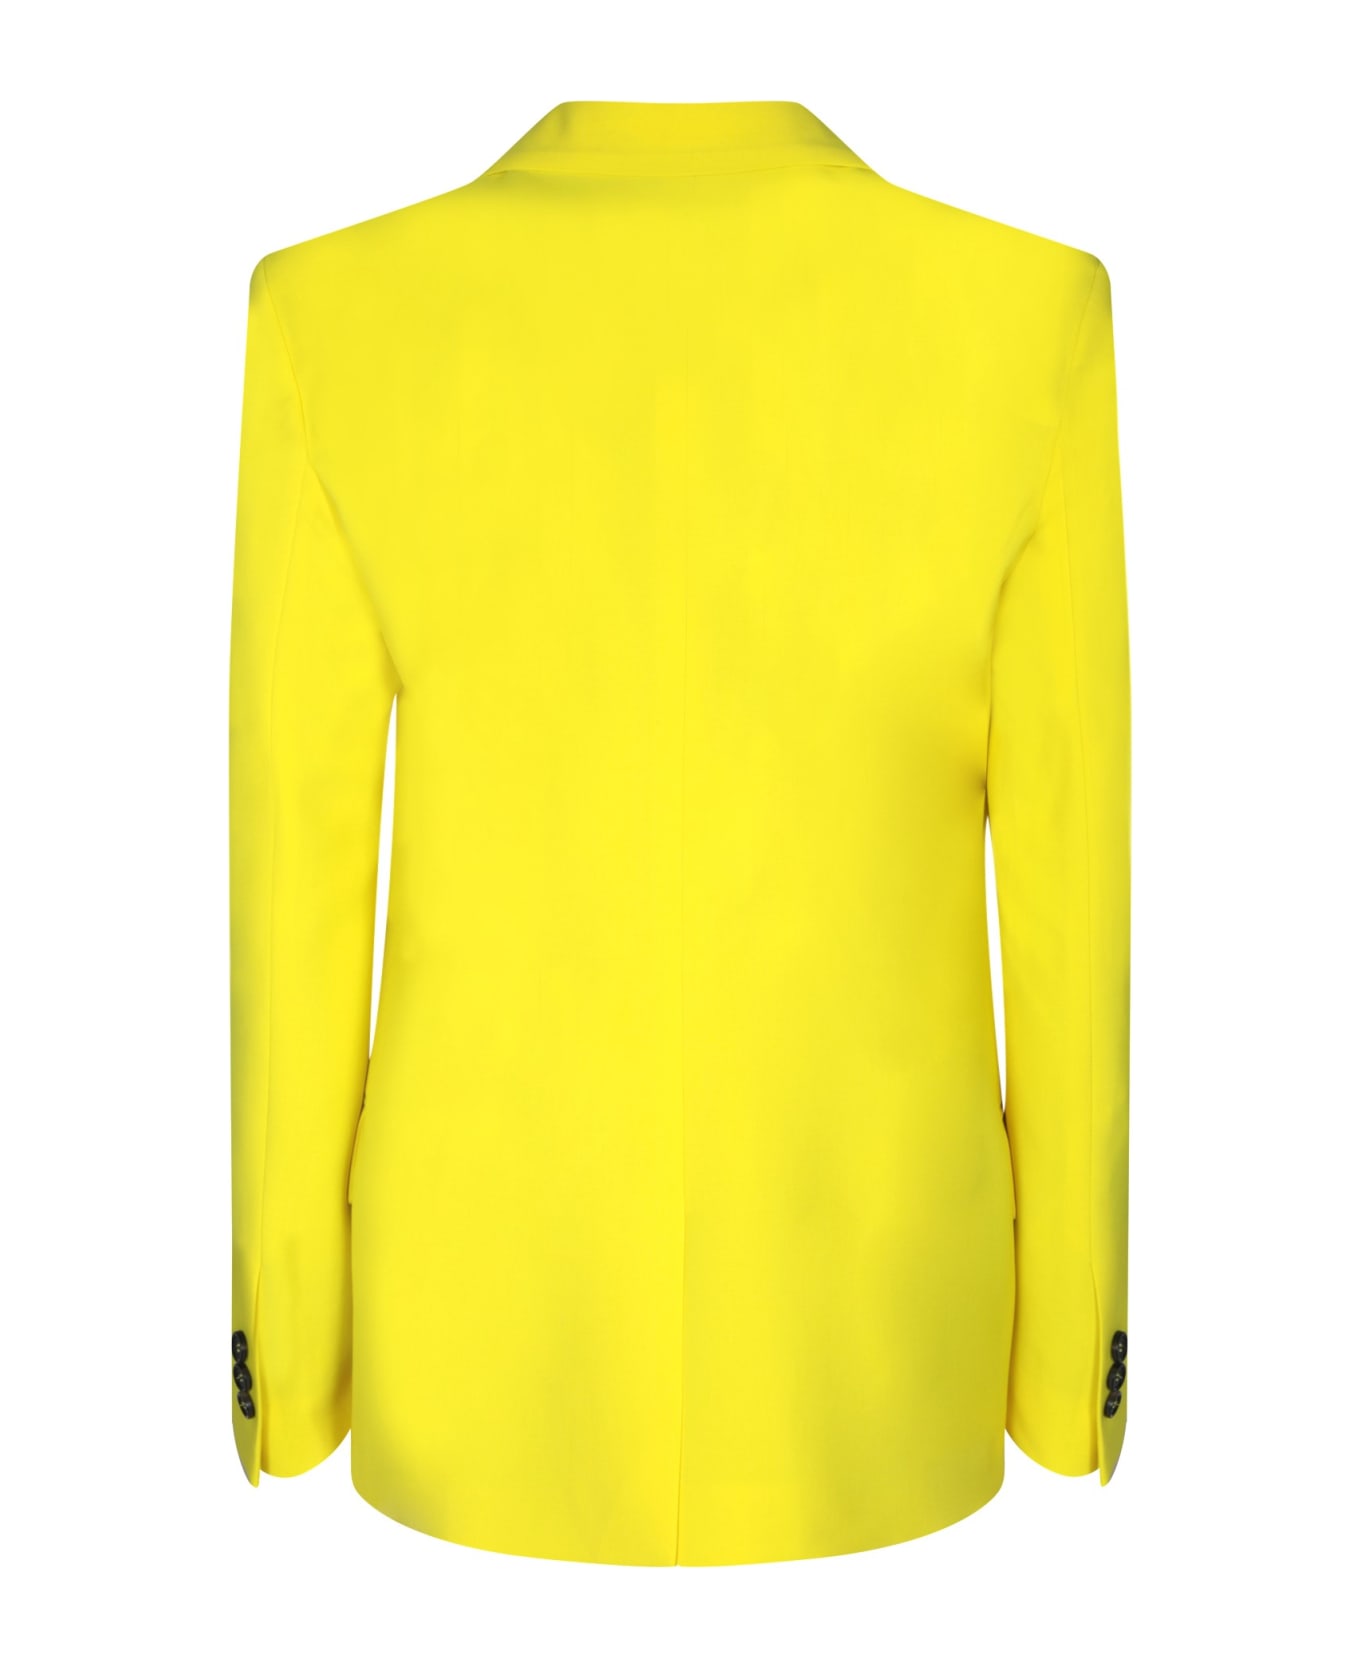 MSGM Single-breasted Yellow Jacket - Yellow